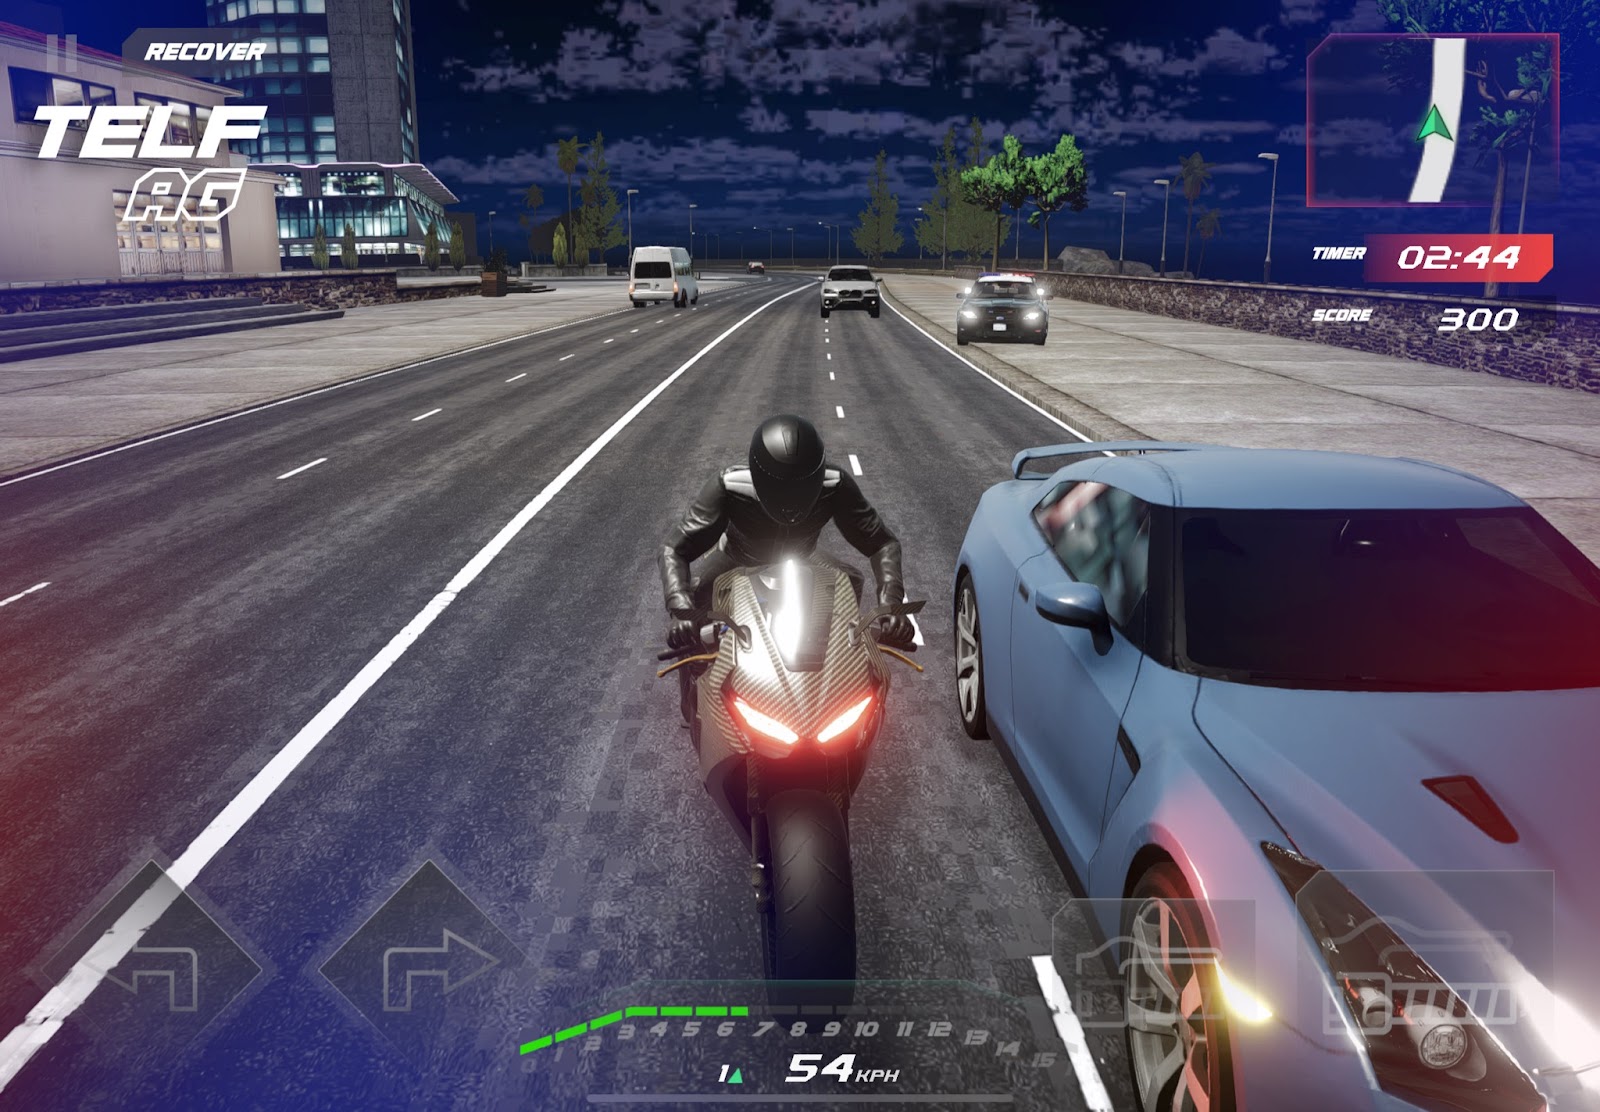 telf ag - install bike racing game